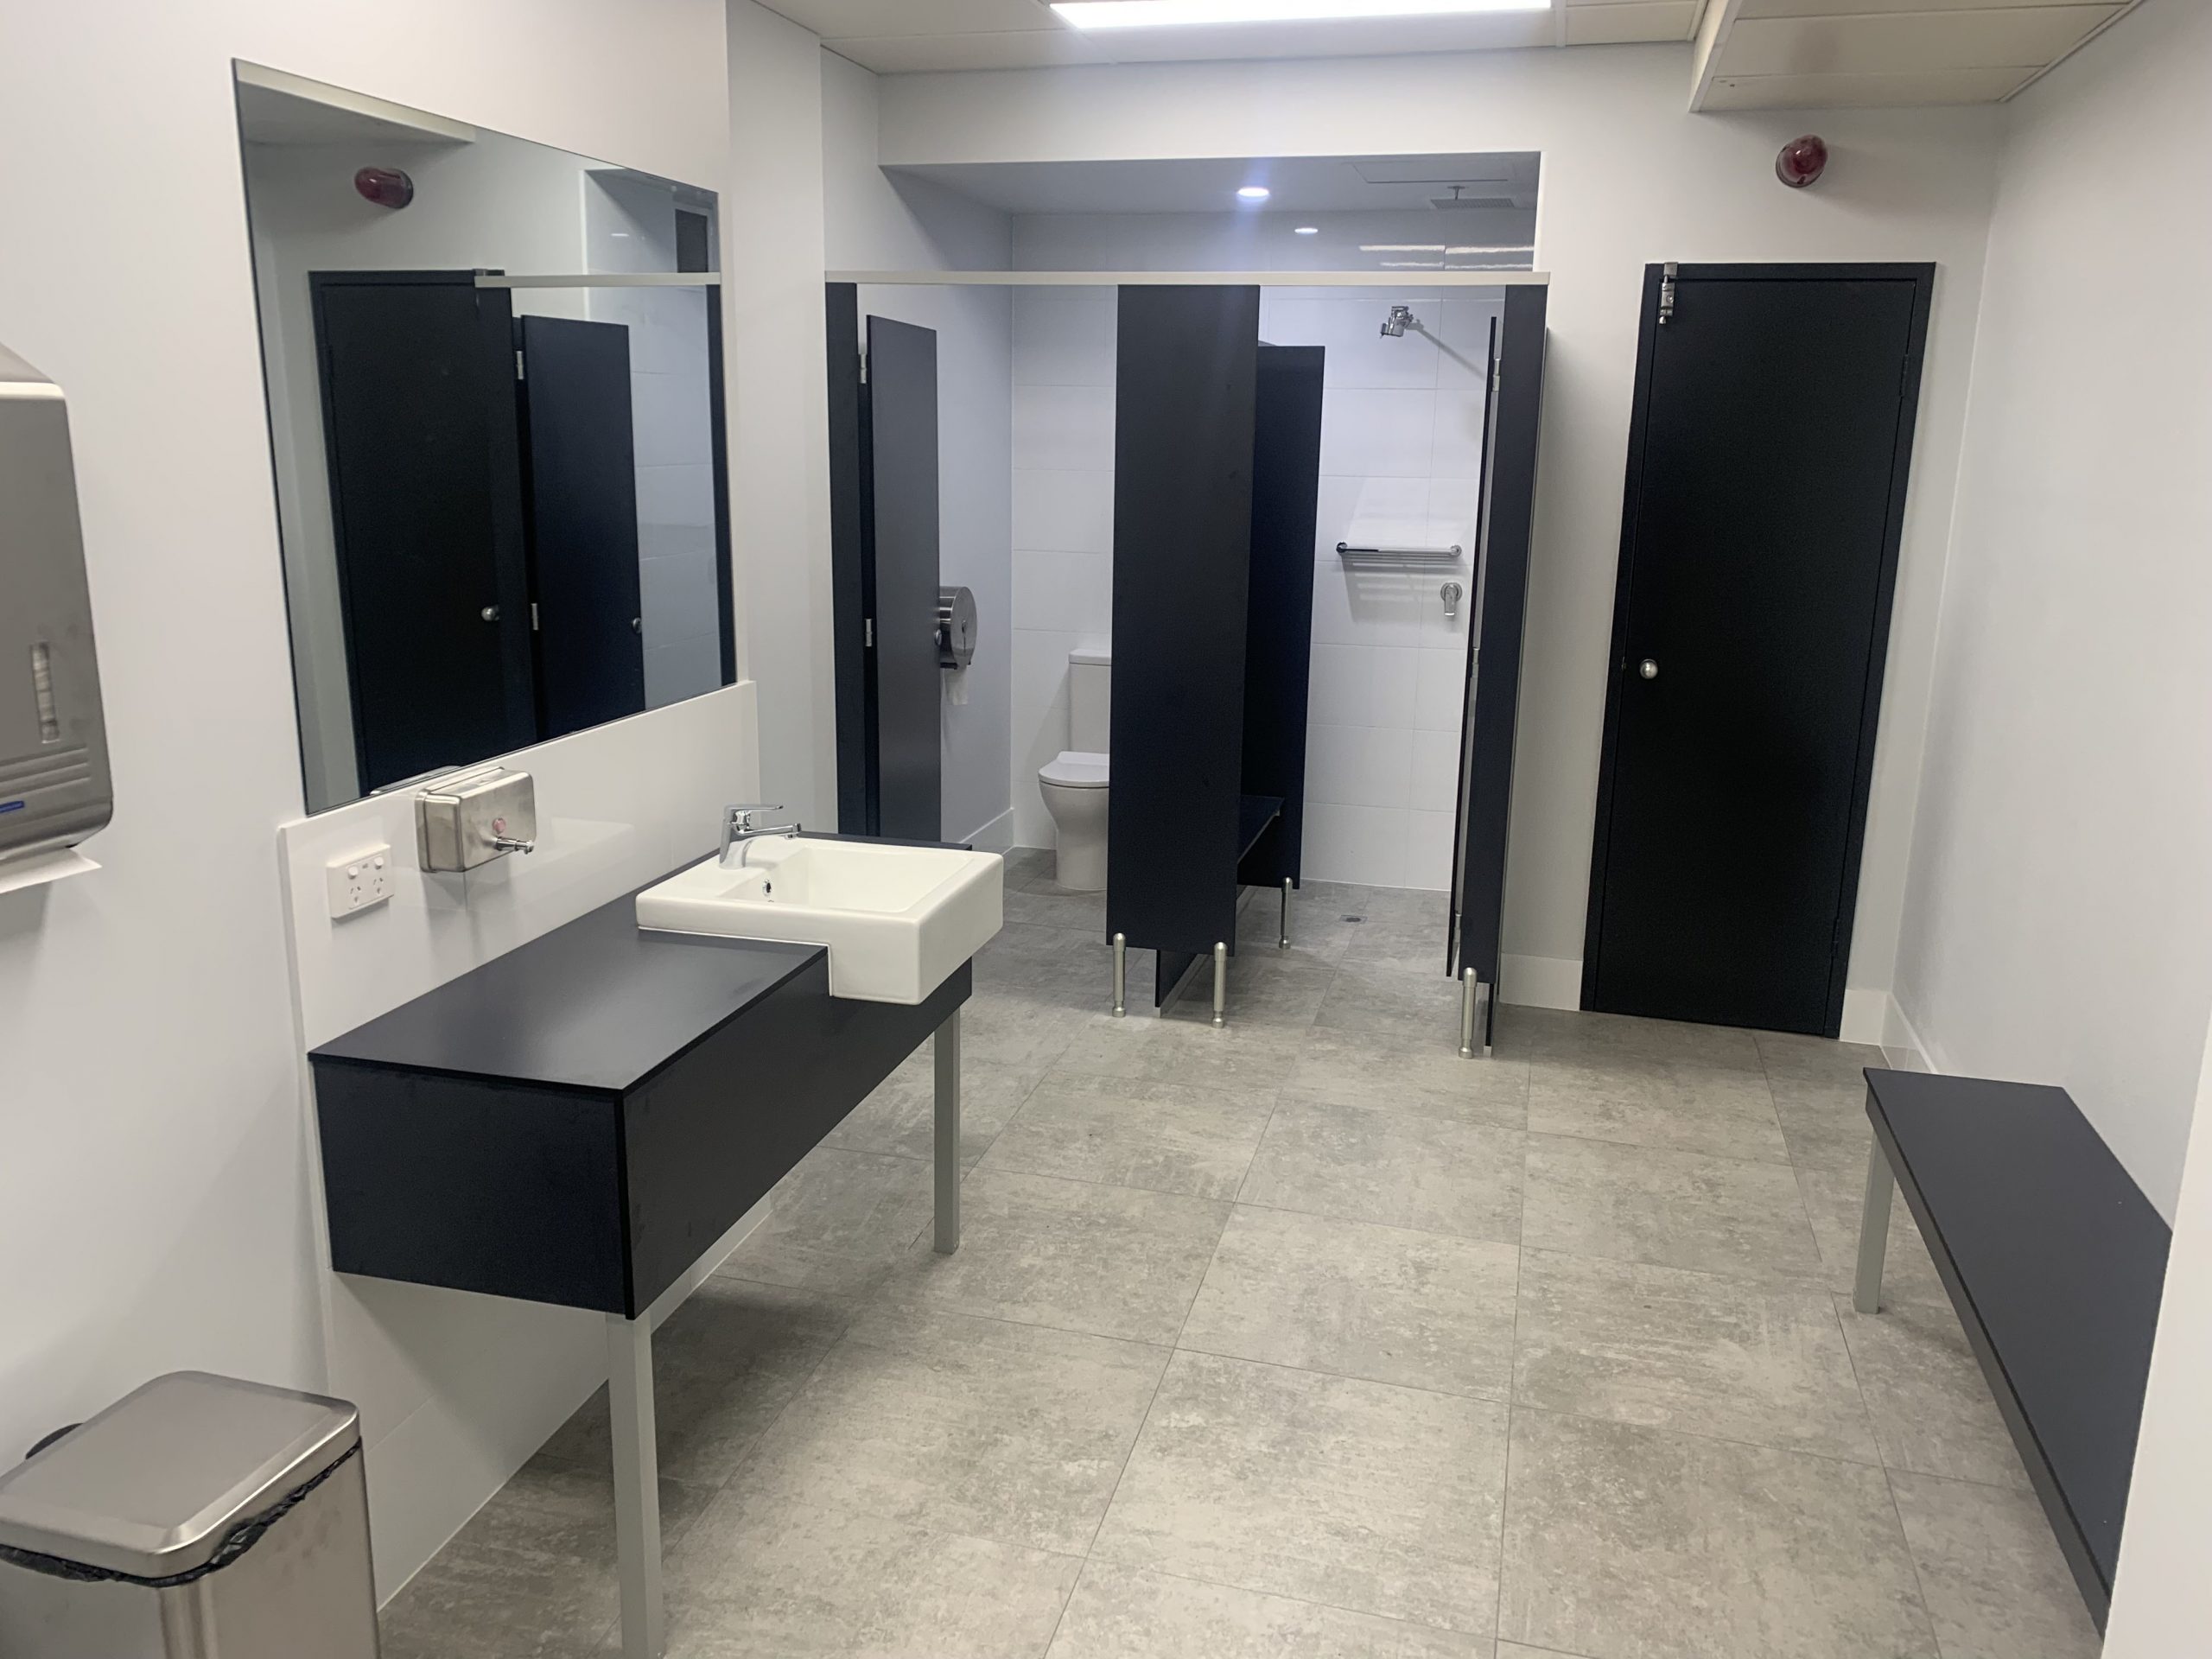 Commercial & Industrial bathrooms plumbing by Northway Plumbing in Adelaide